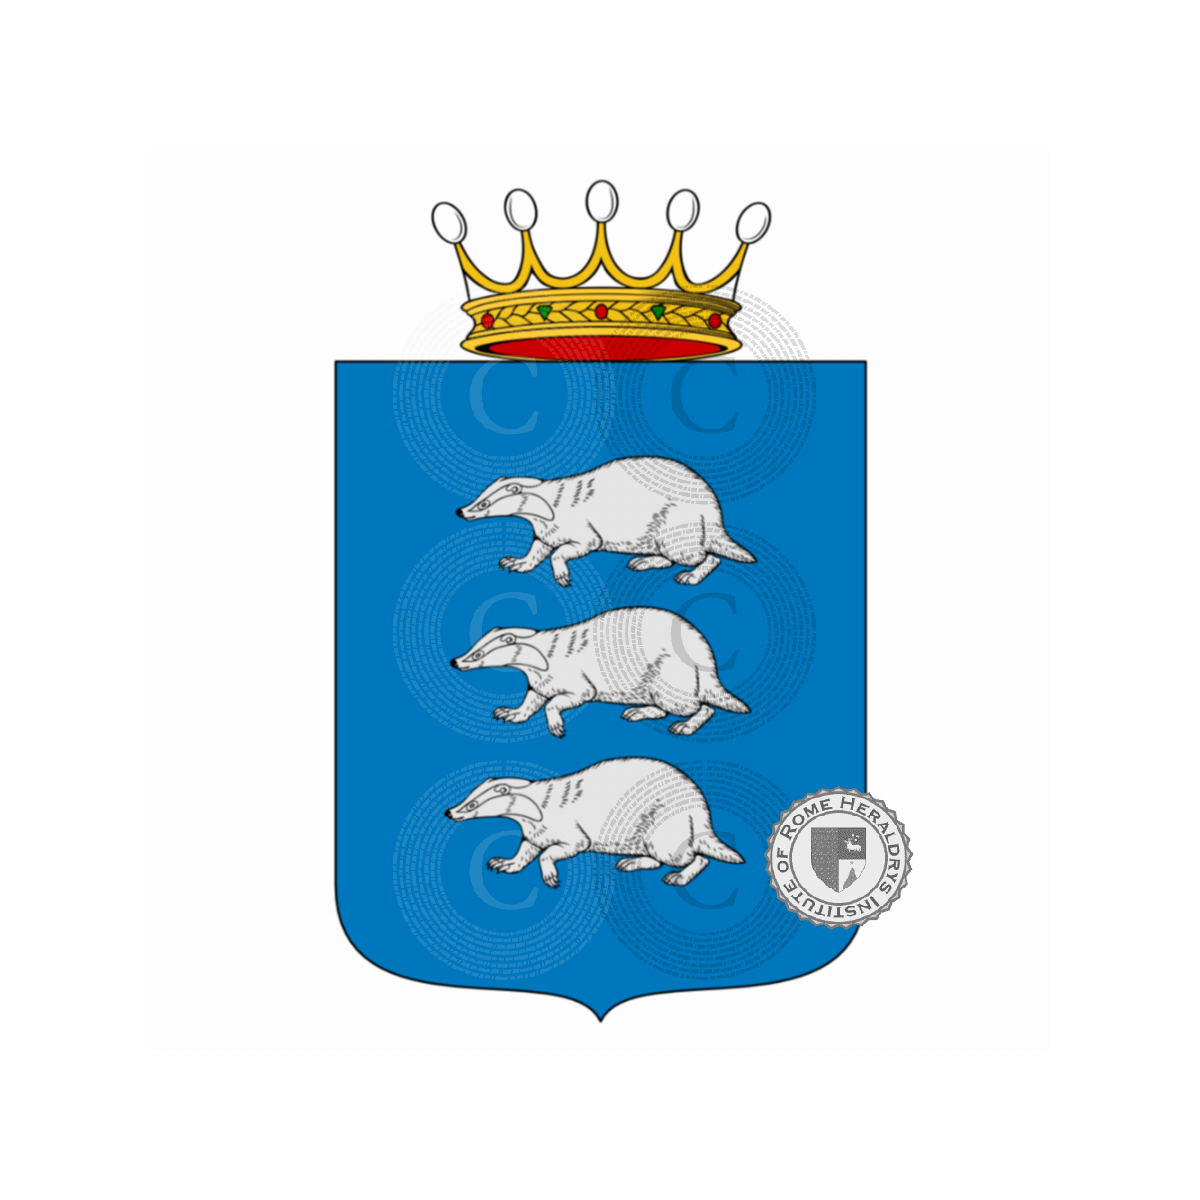 Wappen der FamilieArmellina, Armellina,Armellini